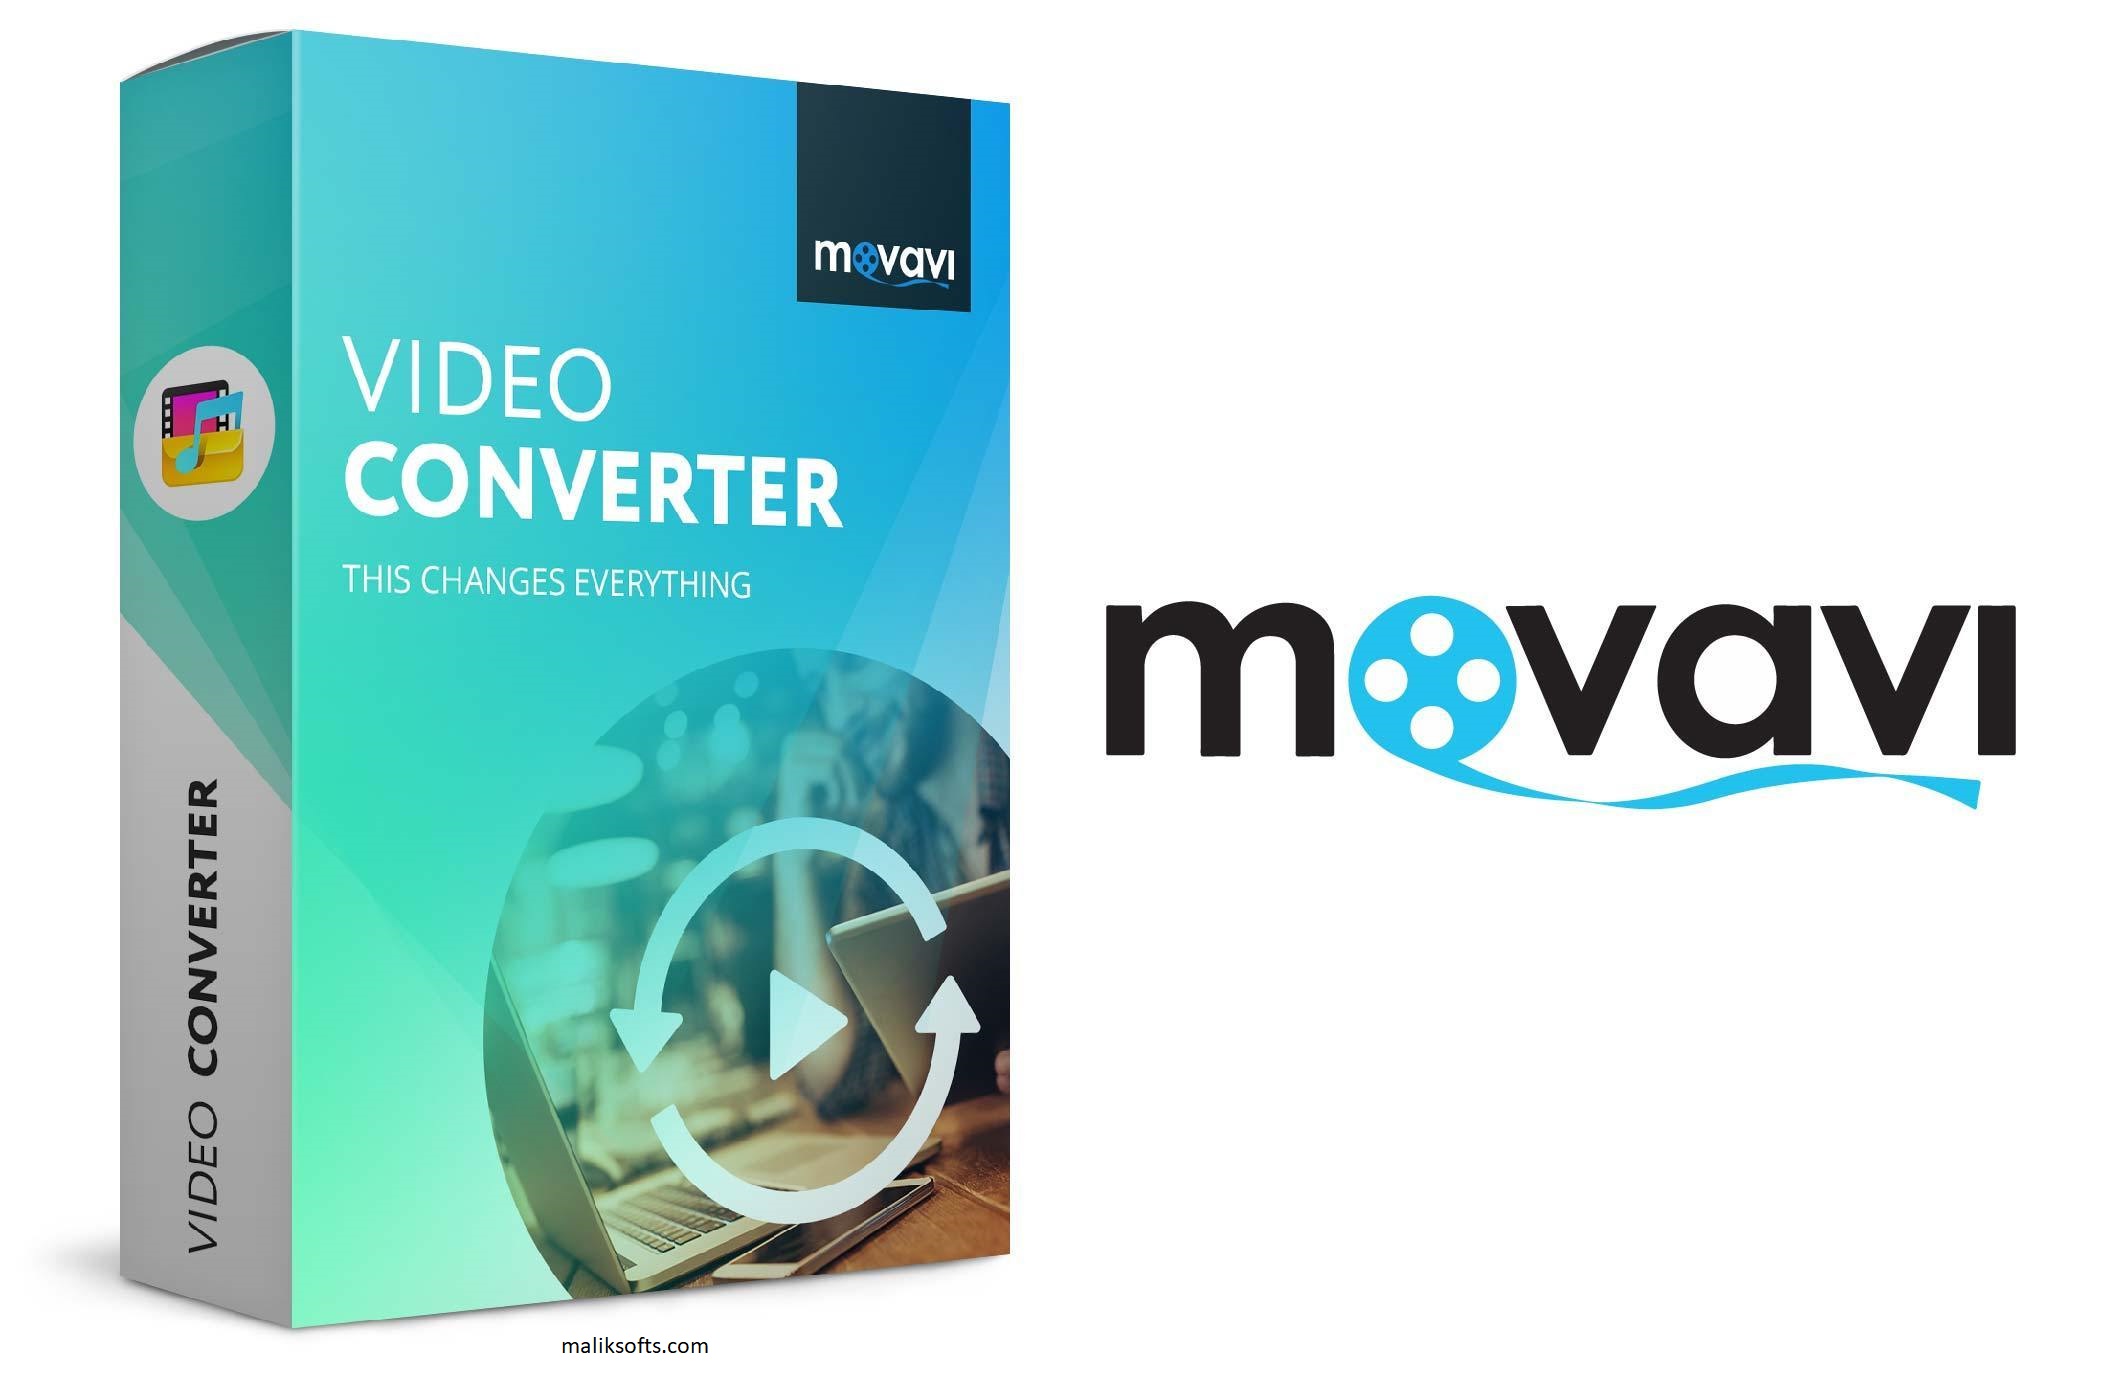 movavi video converter full version free download